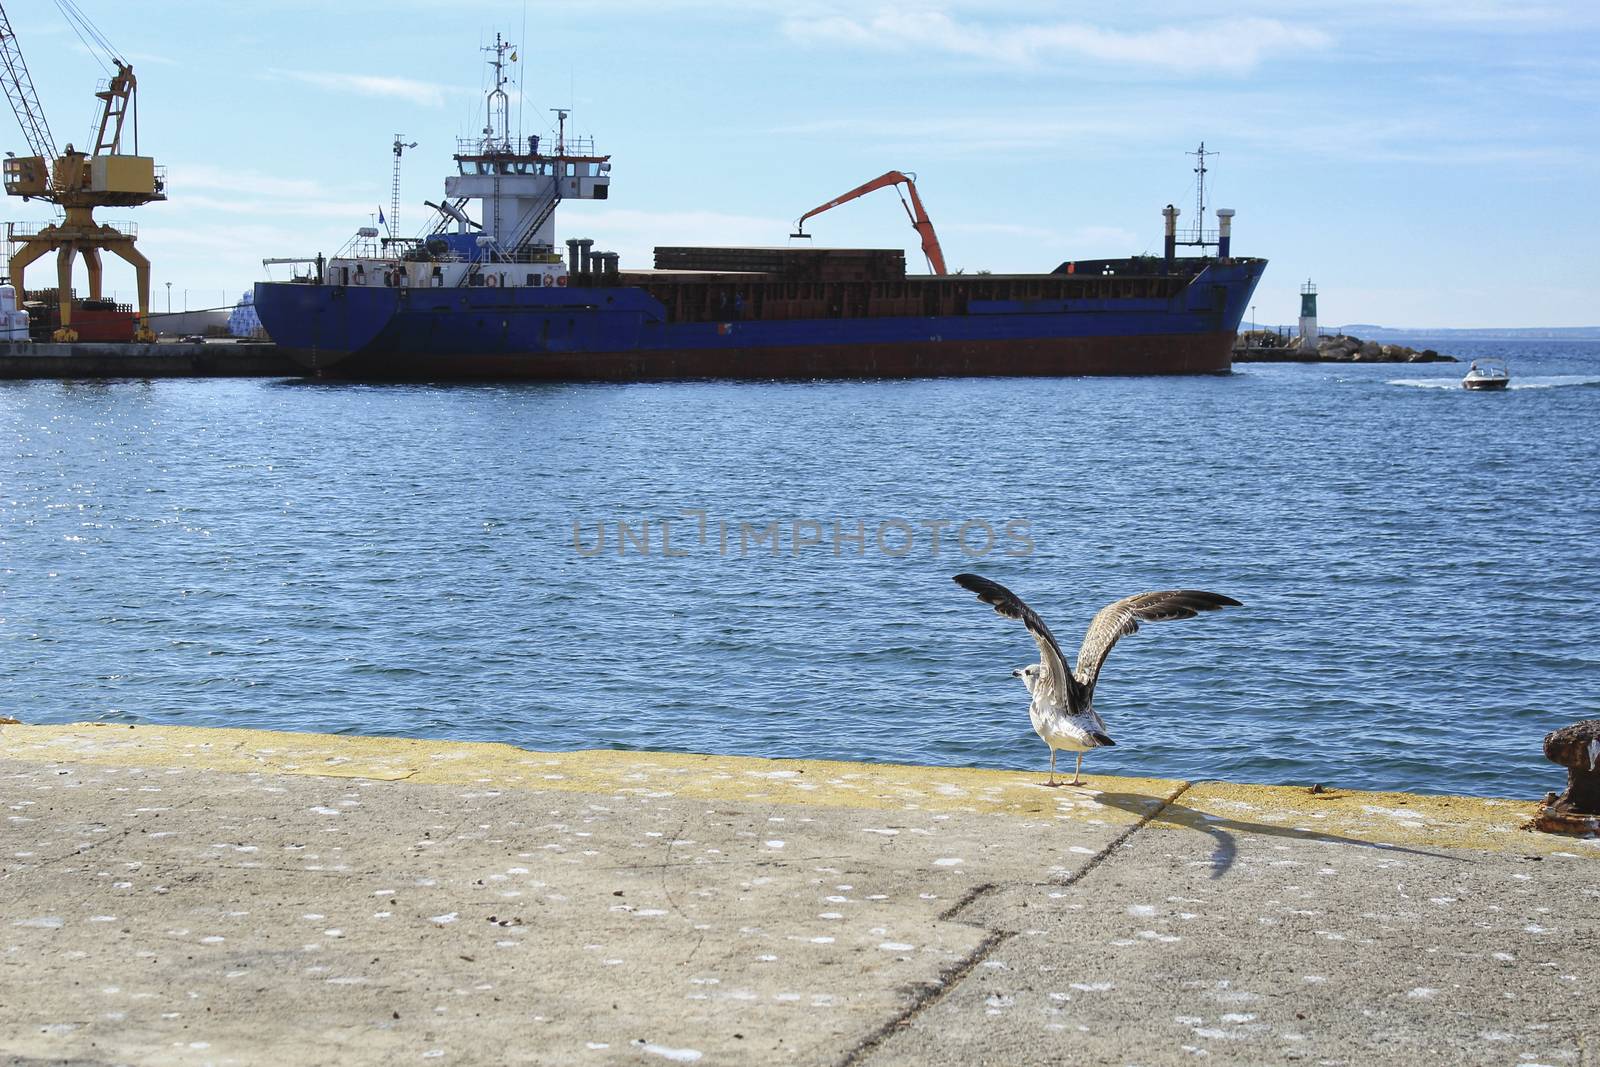 Merchant ship unloading at the dock  by soniabonet